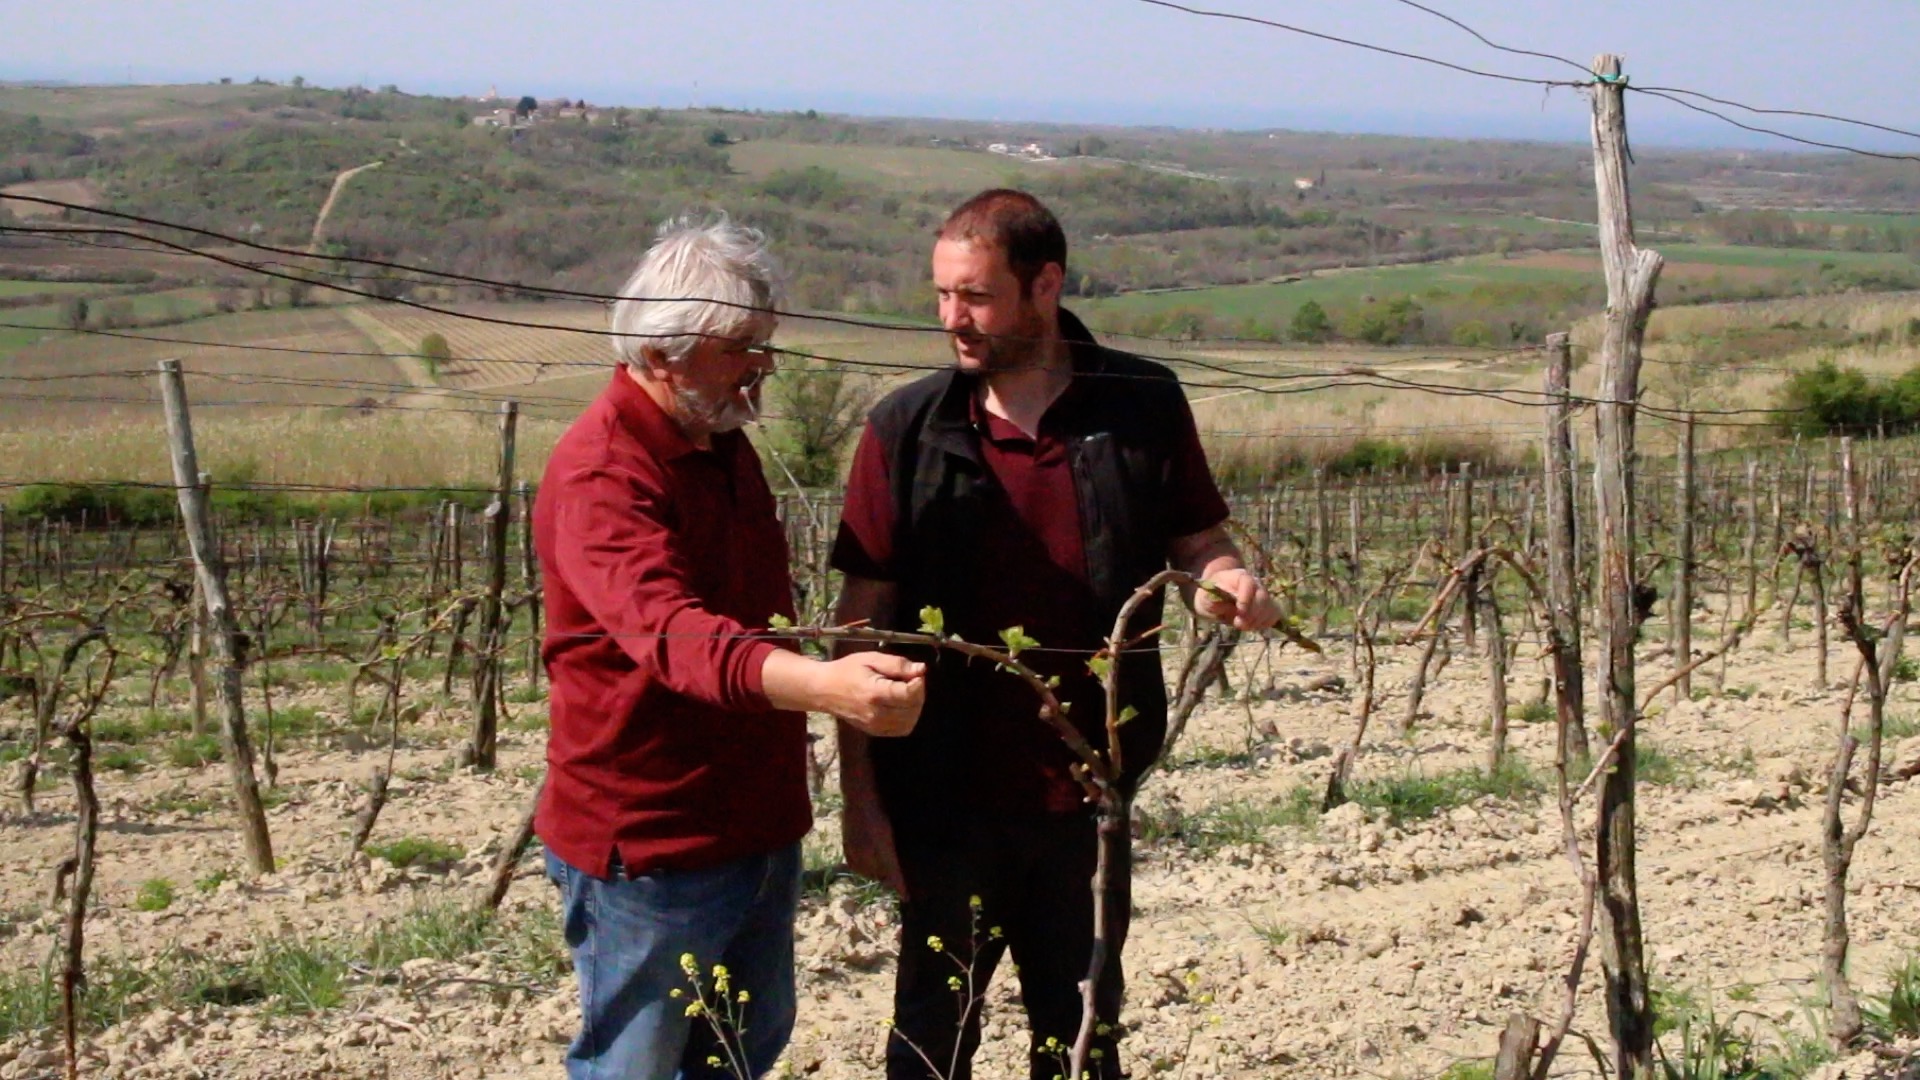 Dimitri Brečević is making natural wine in Istria, Croatia